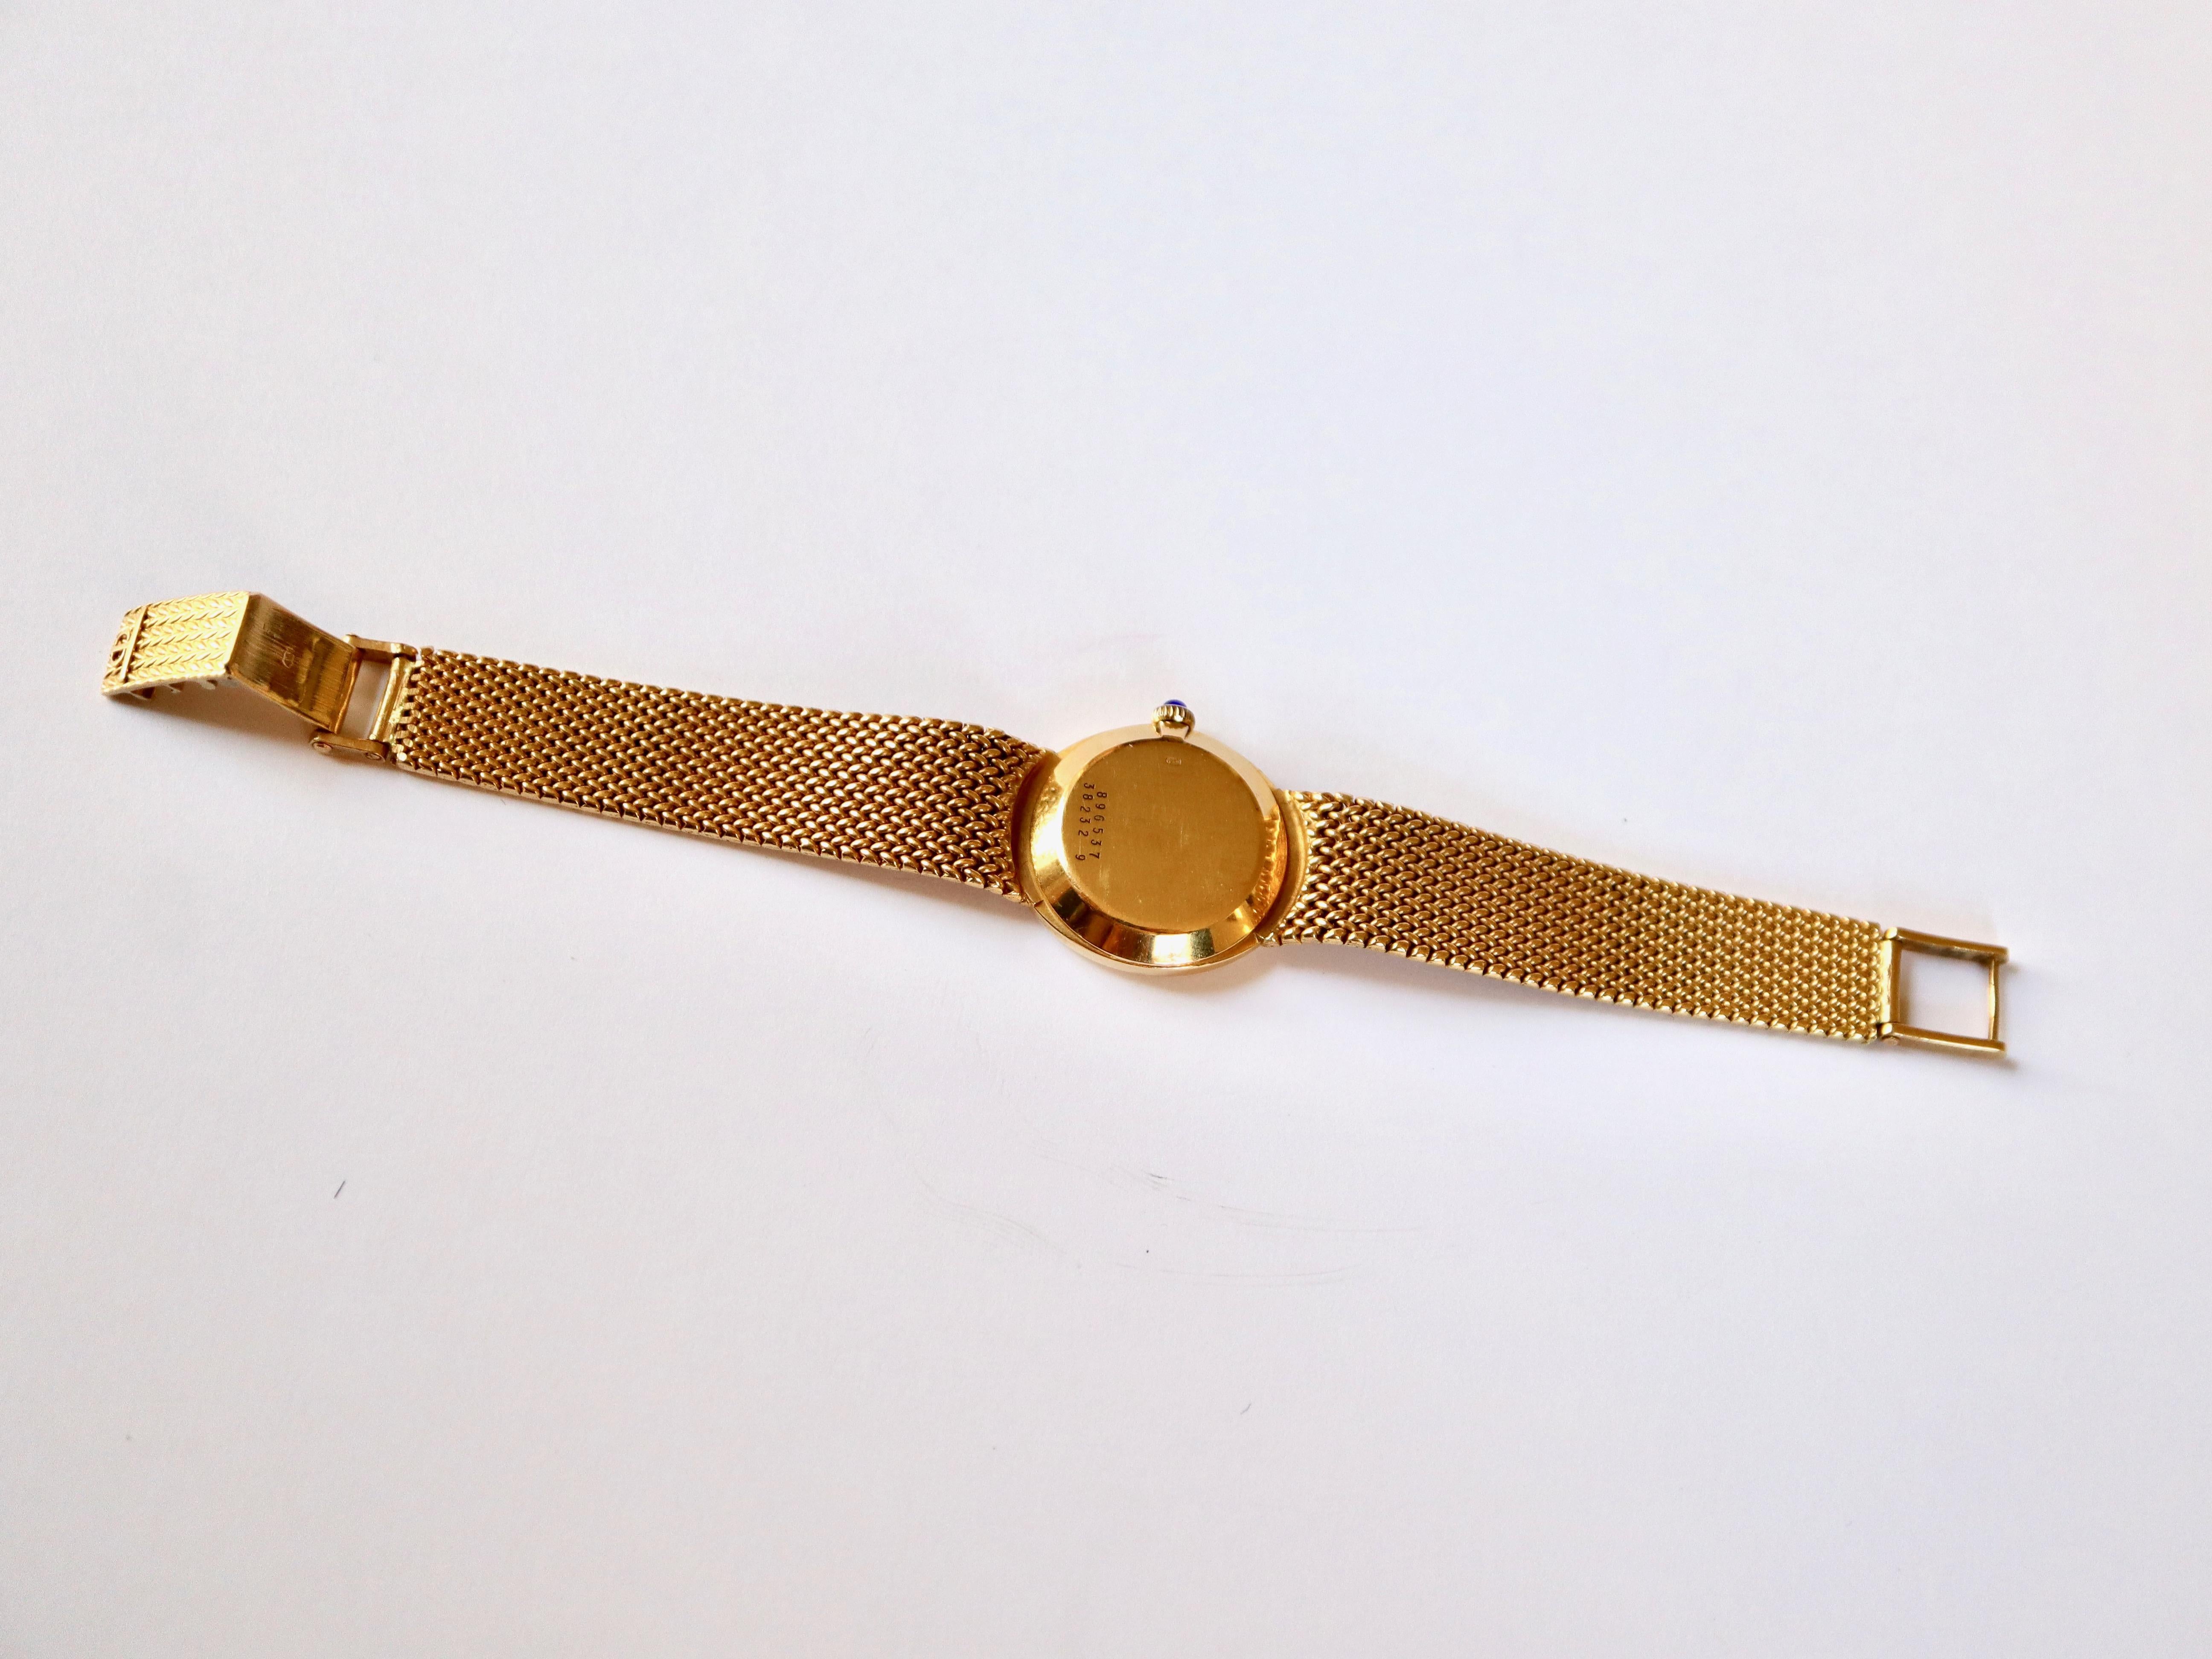 baume & mercier gold watch vintage